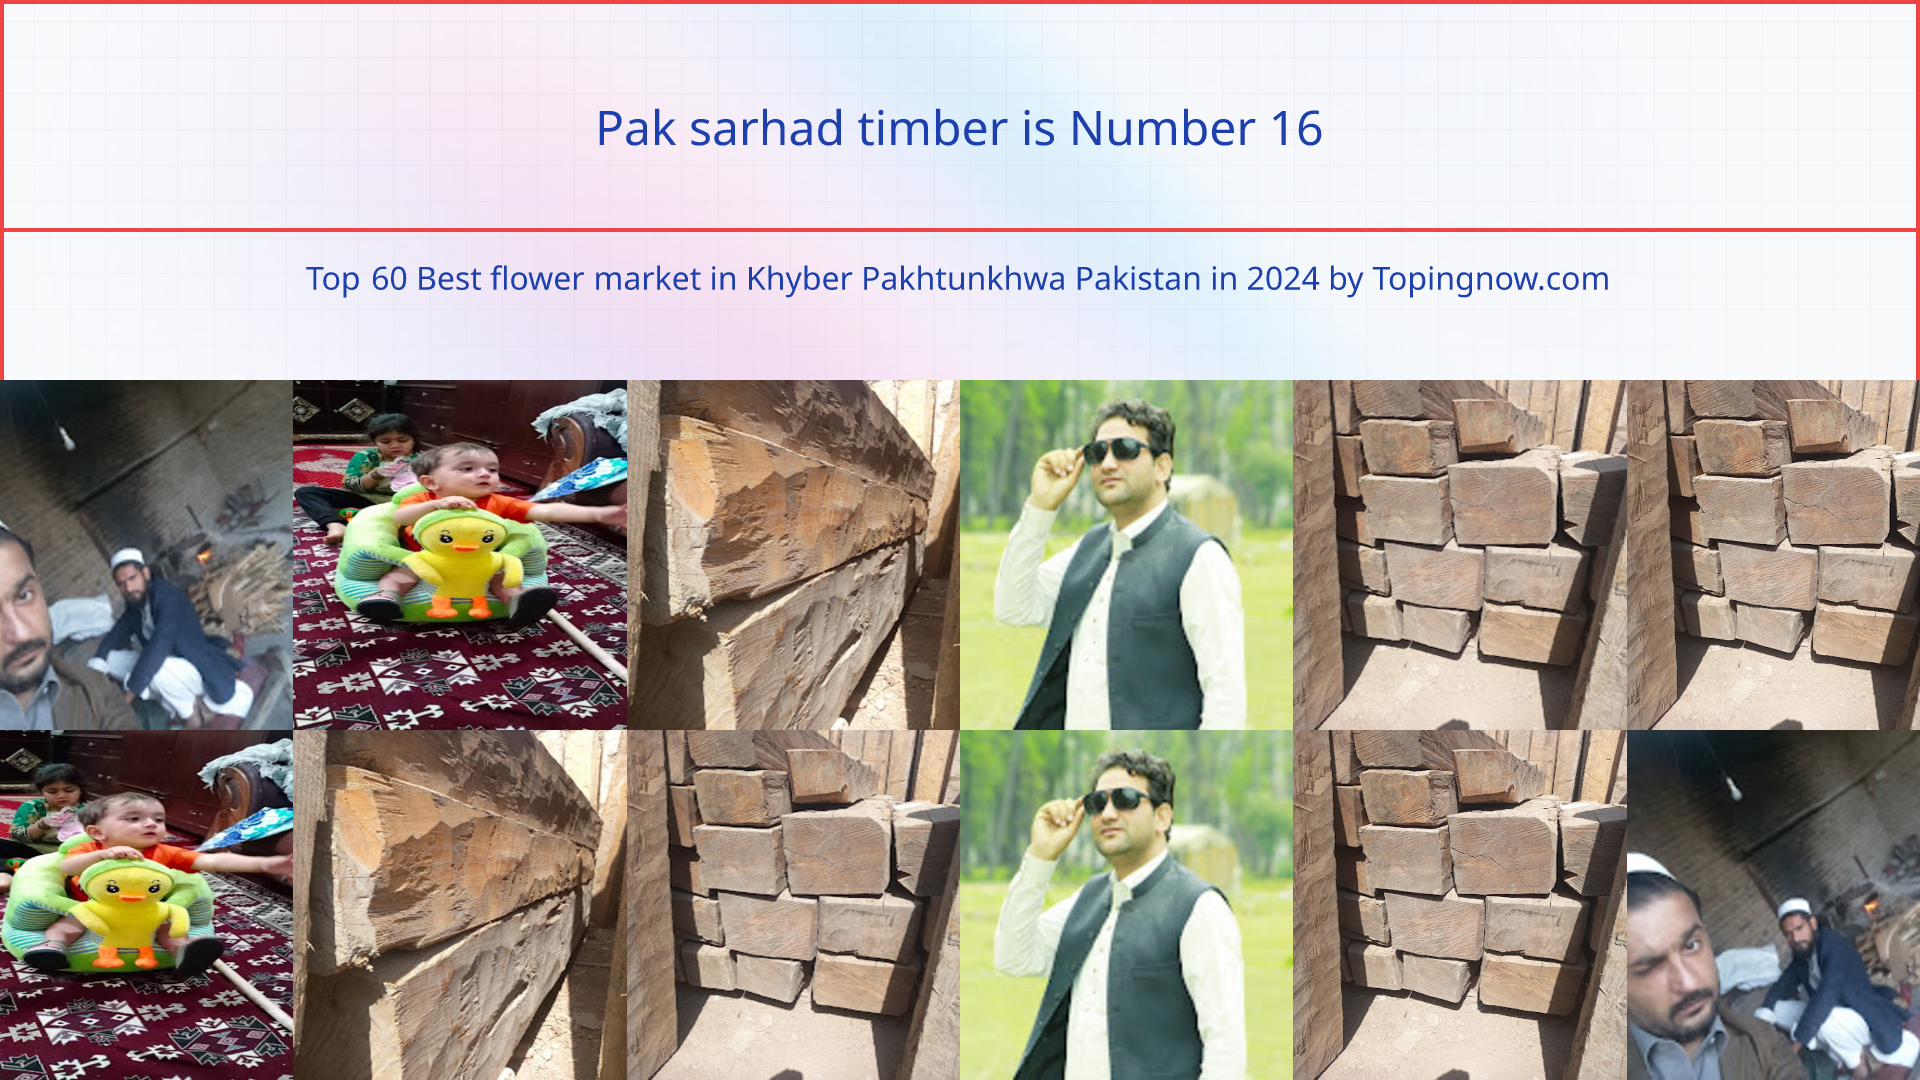 Pak sarhad timber: Top 60 Best flower market in Khyber Pakhtunkhwa Pakistan in 2024